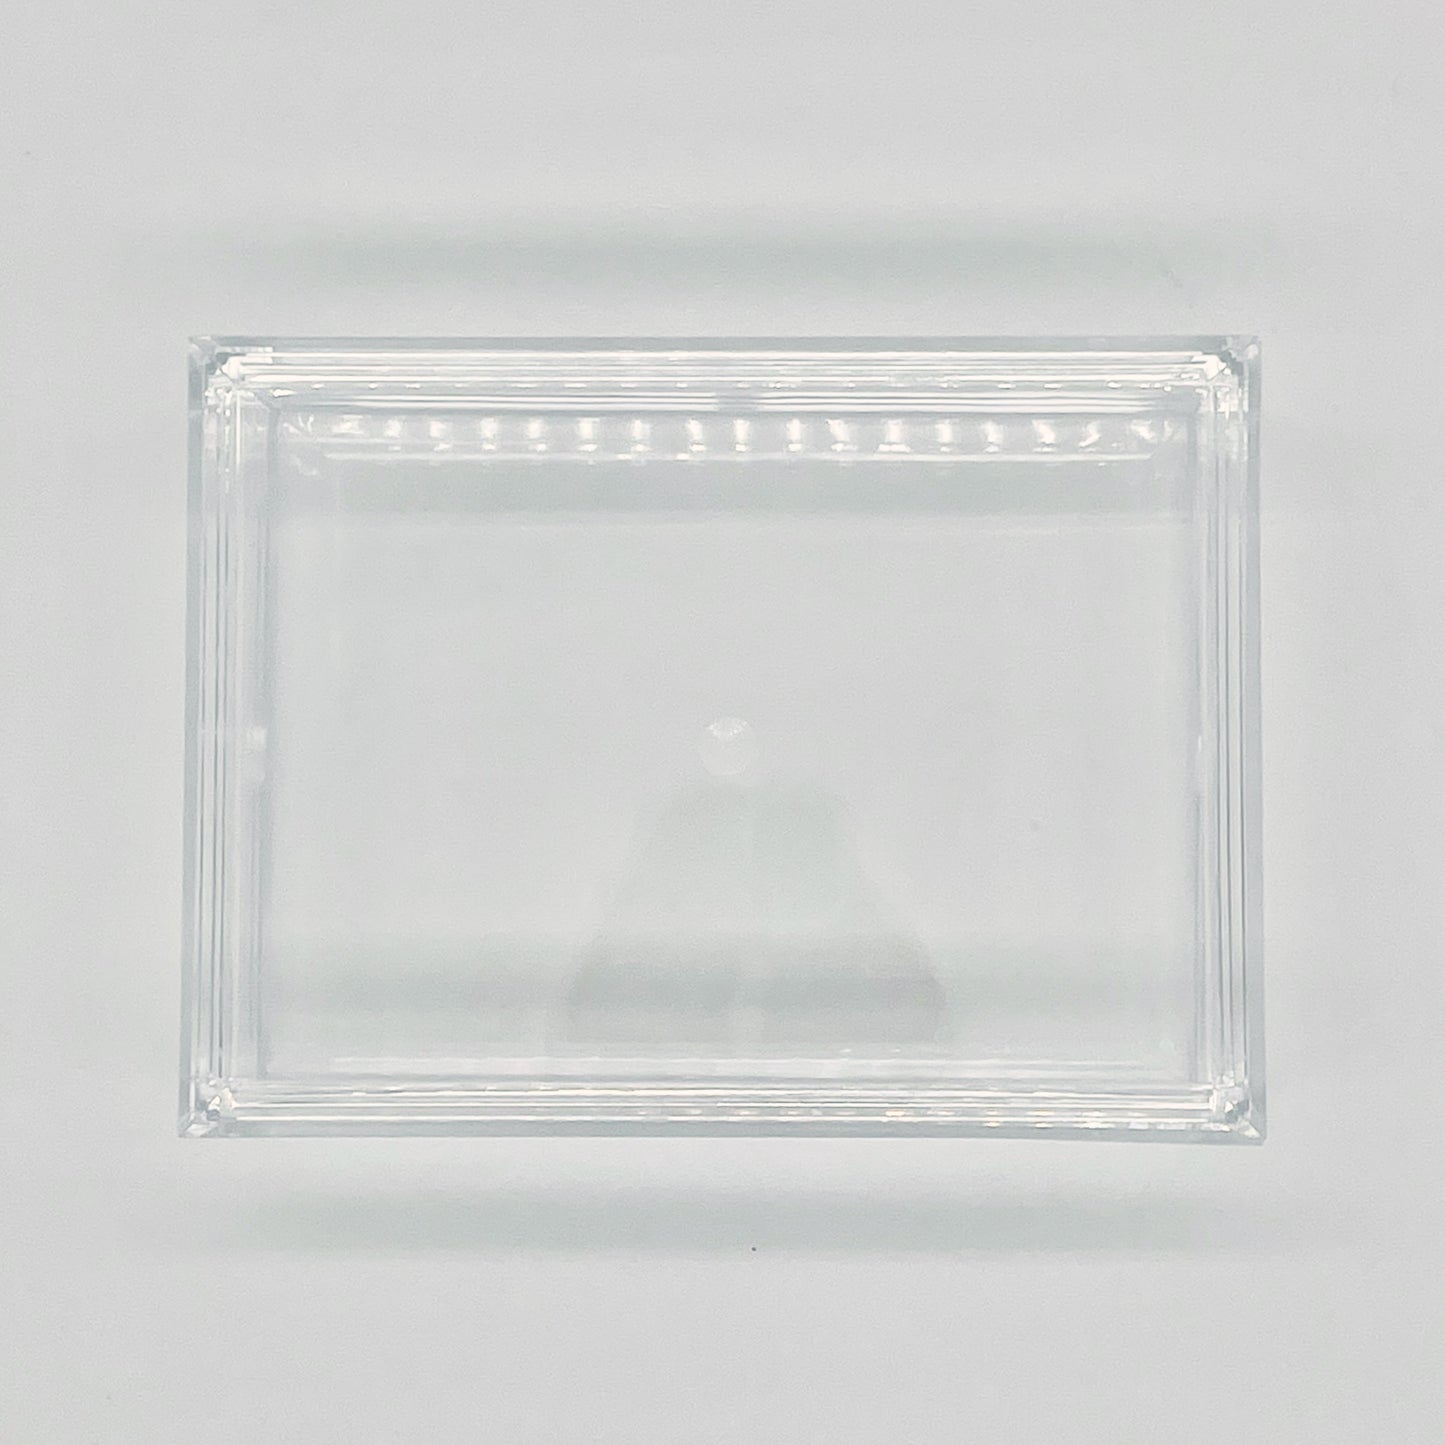 Acrylic Jewelry Box with Photo Frame Lid